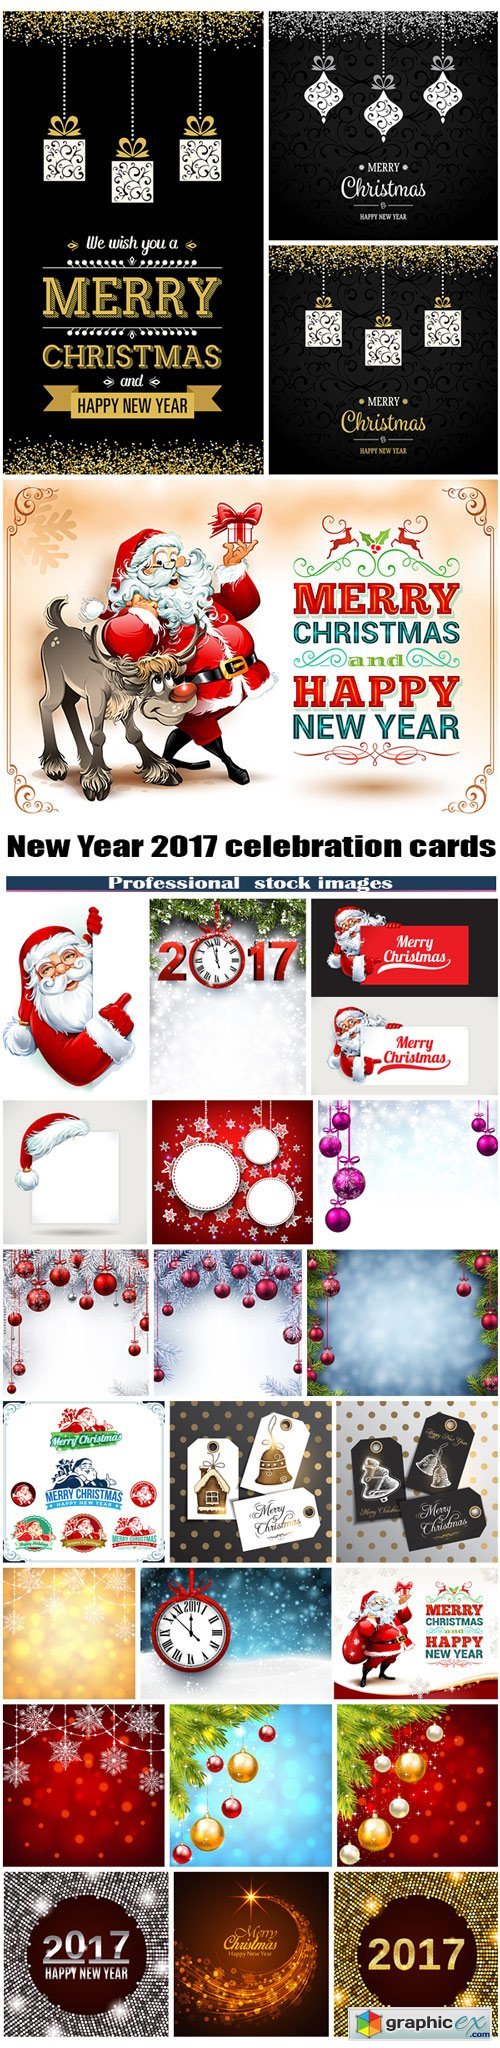 New Year 2017 celebration cards